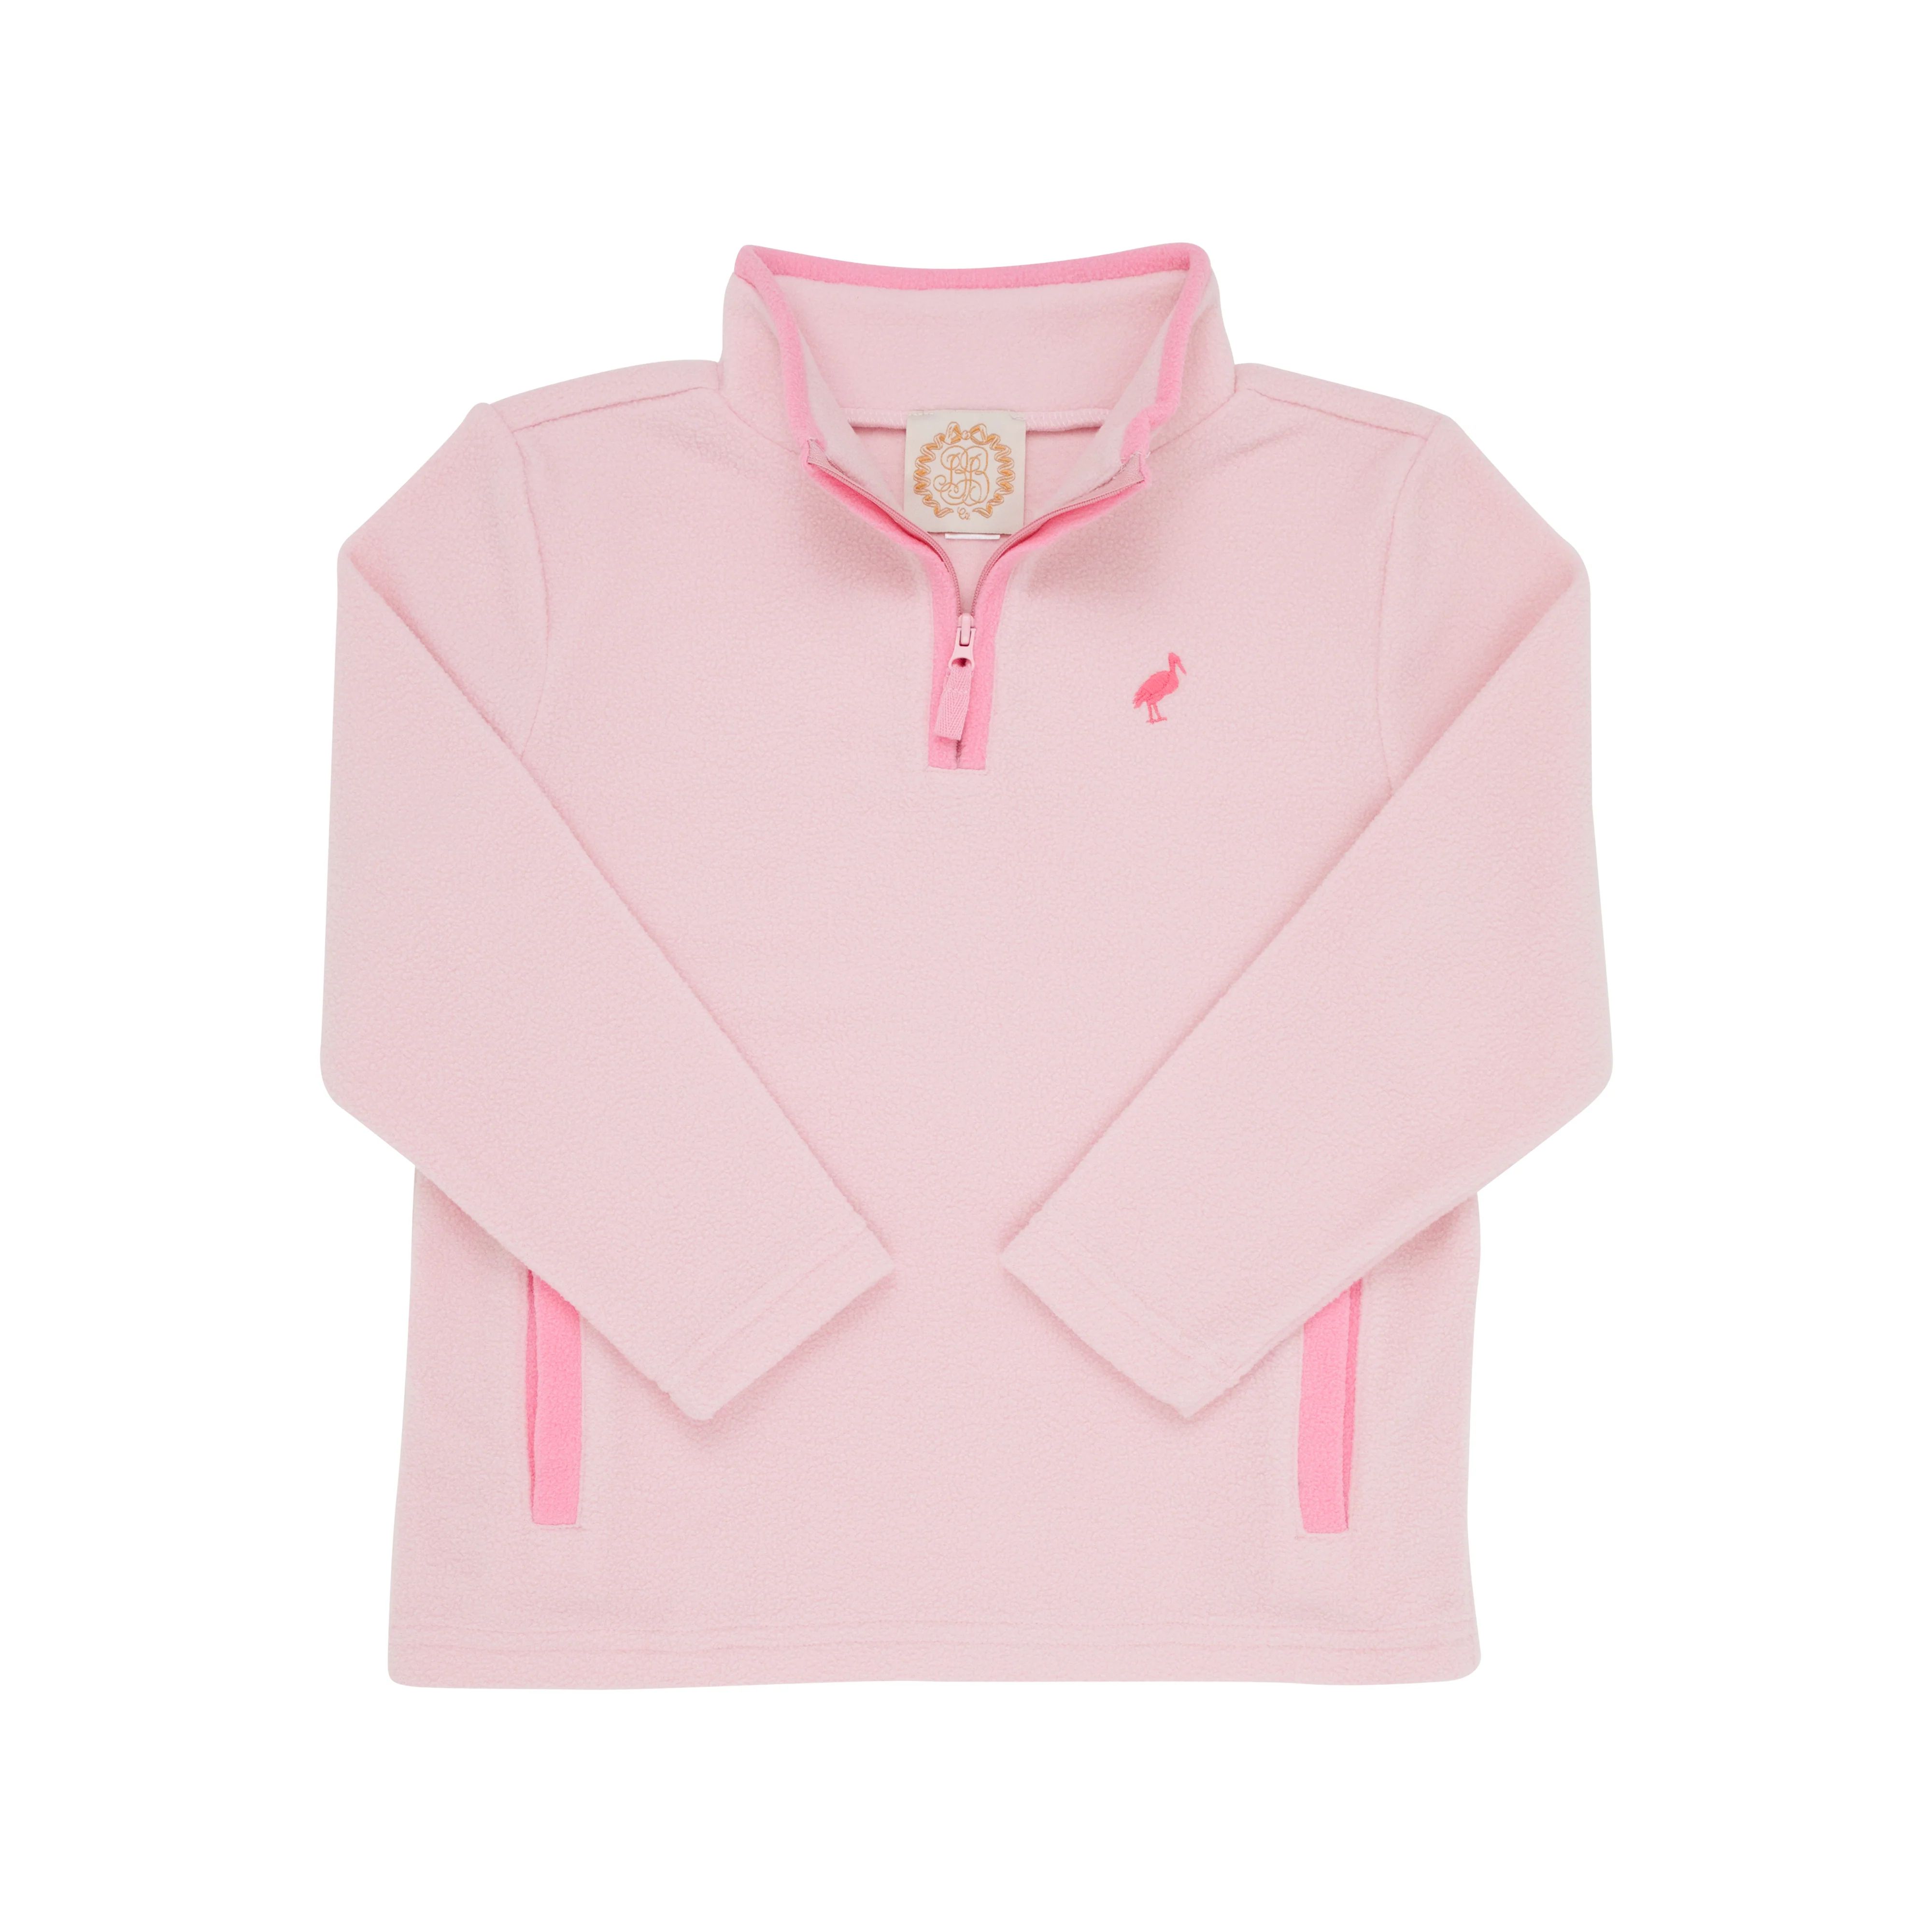 Hayword Half-Zip (Fleece) - Palm Beach Pink with Hamptons Hot Pink Stork | The Beaufort Bonnet Company